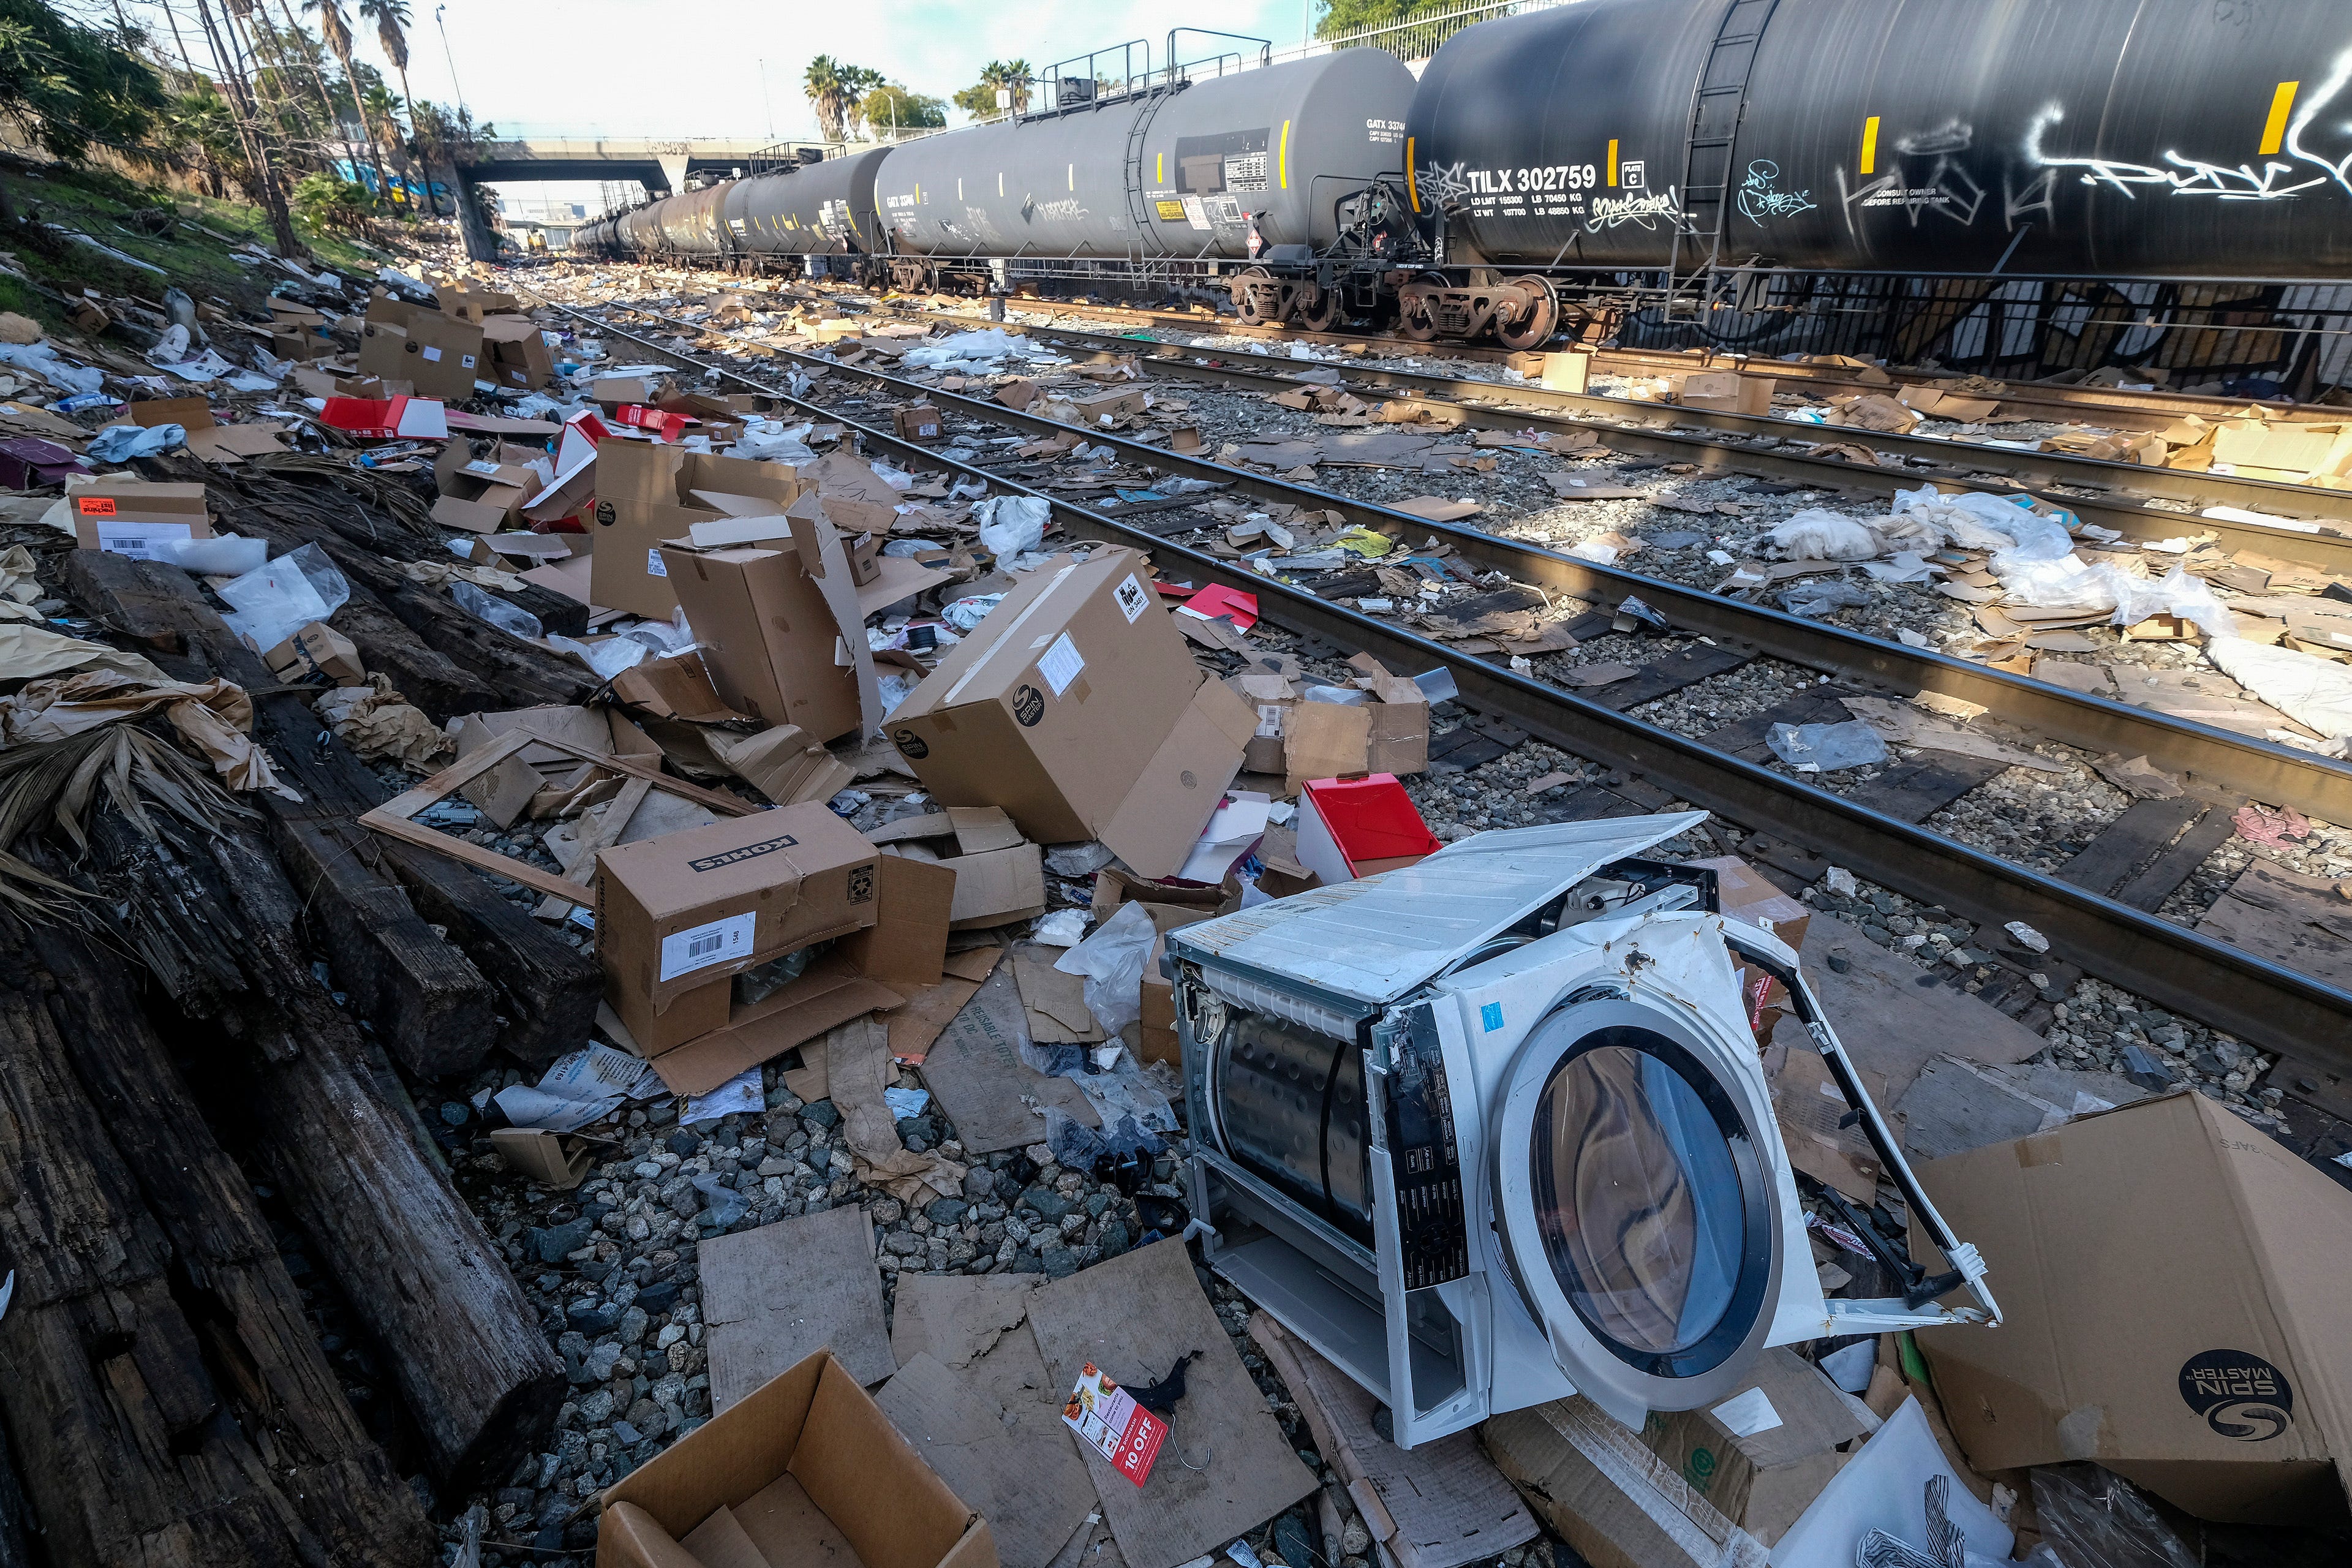 Images show sea of stolen packages and debris after thieves raid LA trains